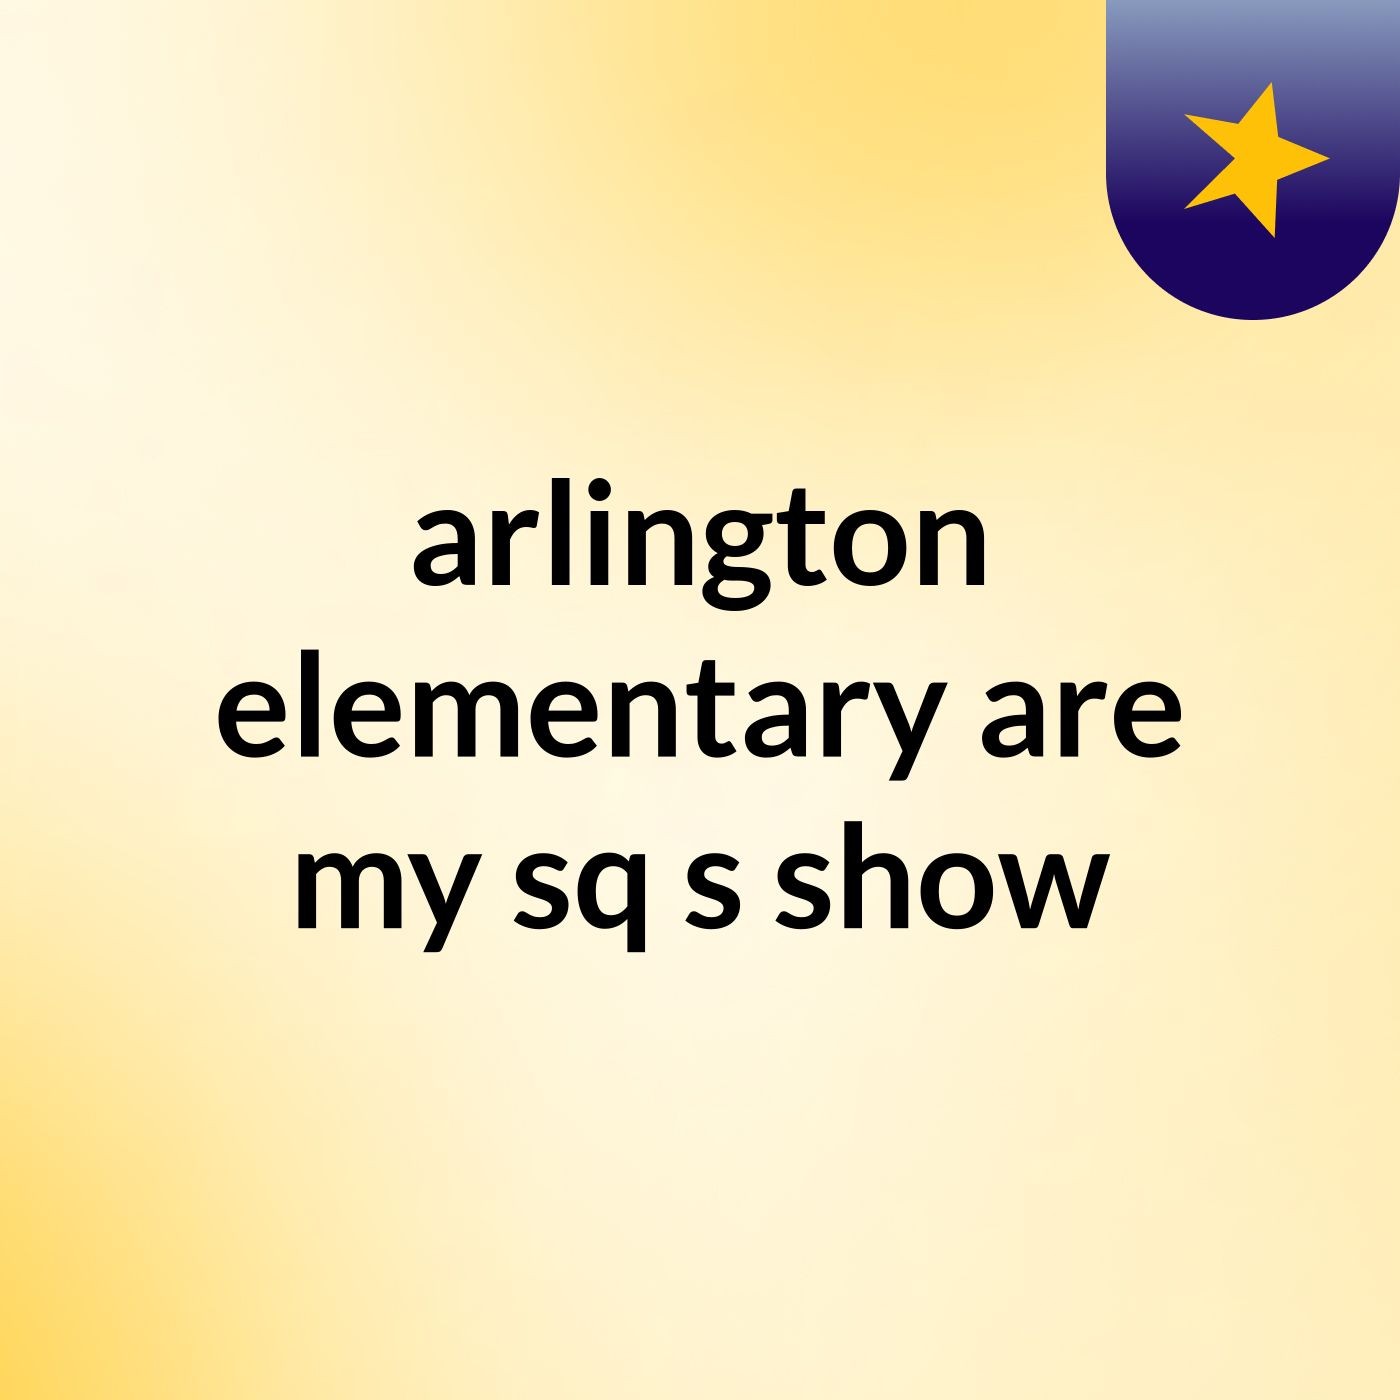 arlington elementary are my sq's show